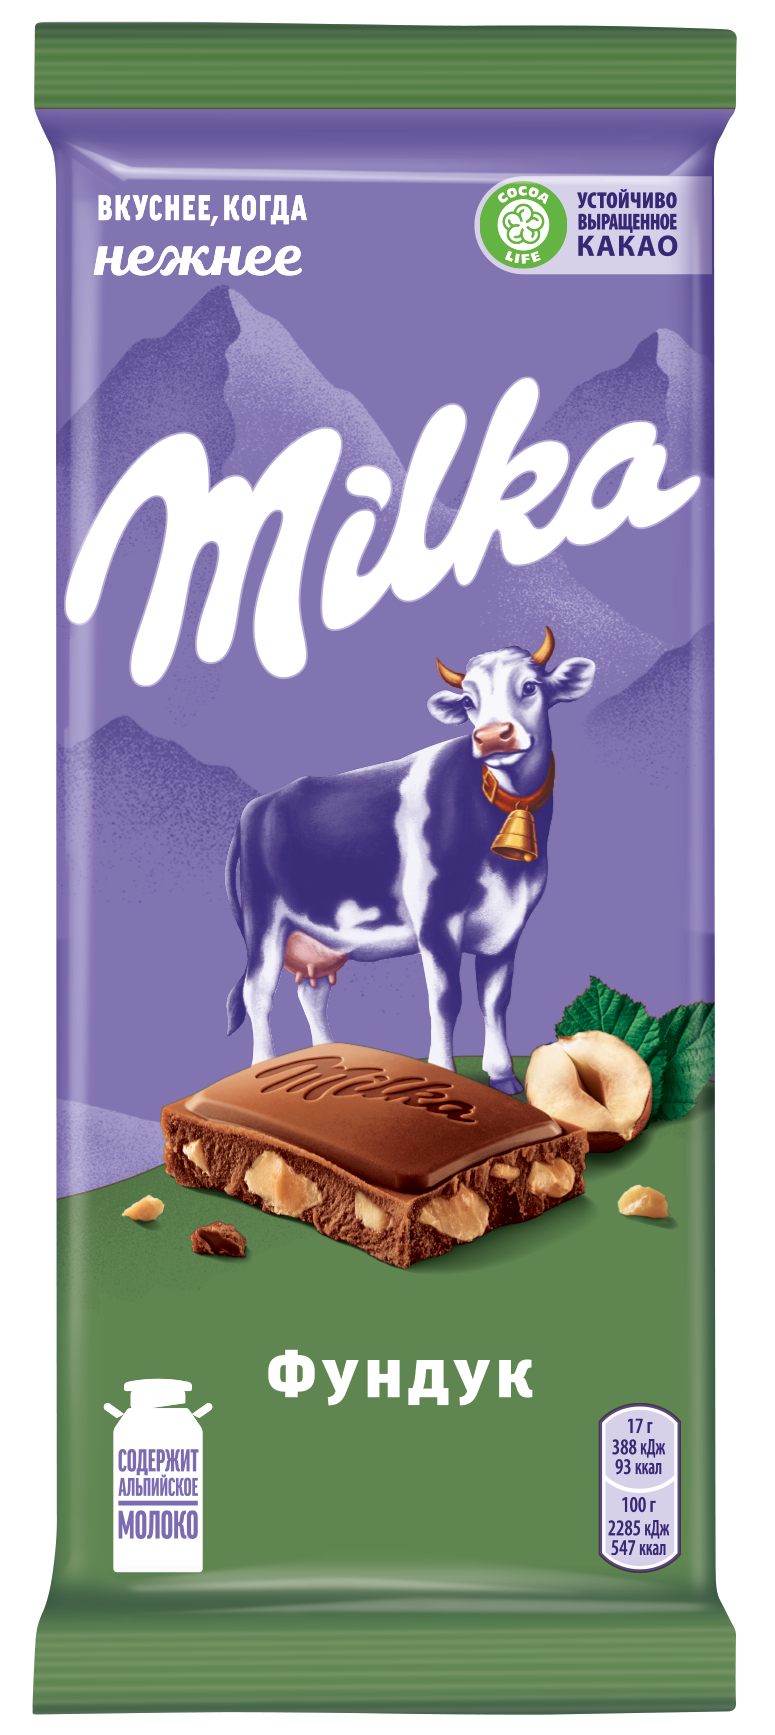 Шоколад Milka молочный с фундуком 85 г